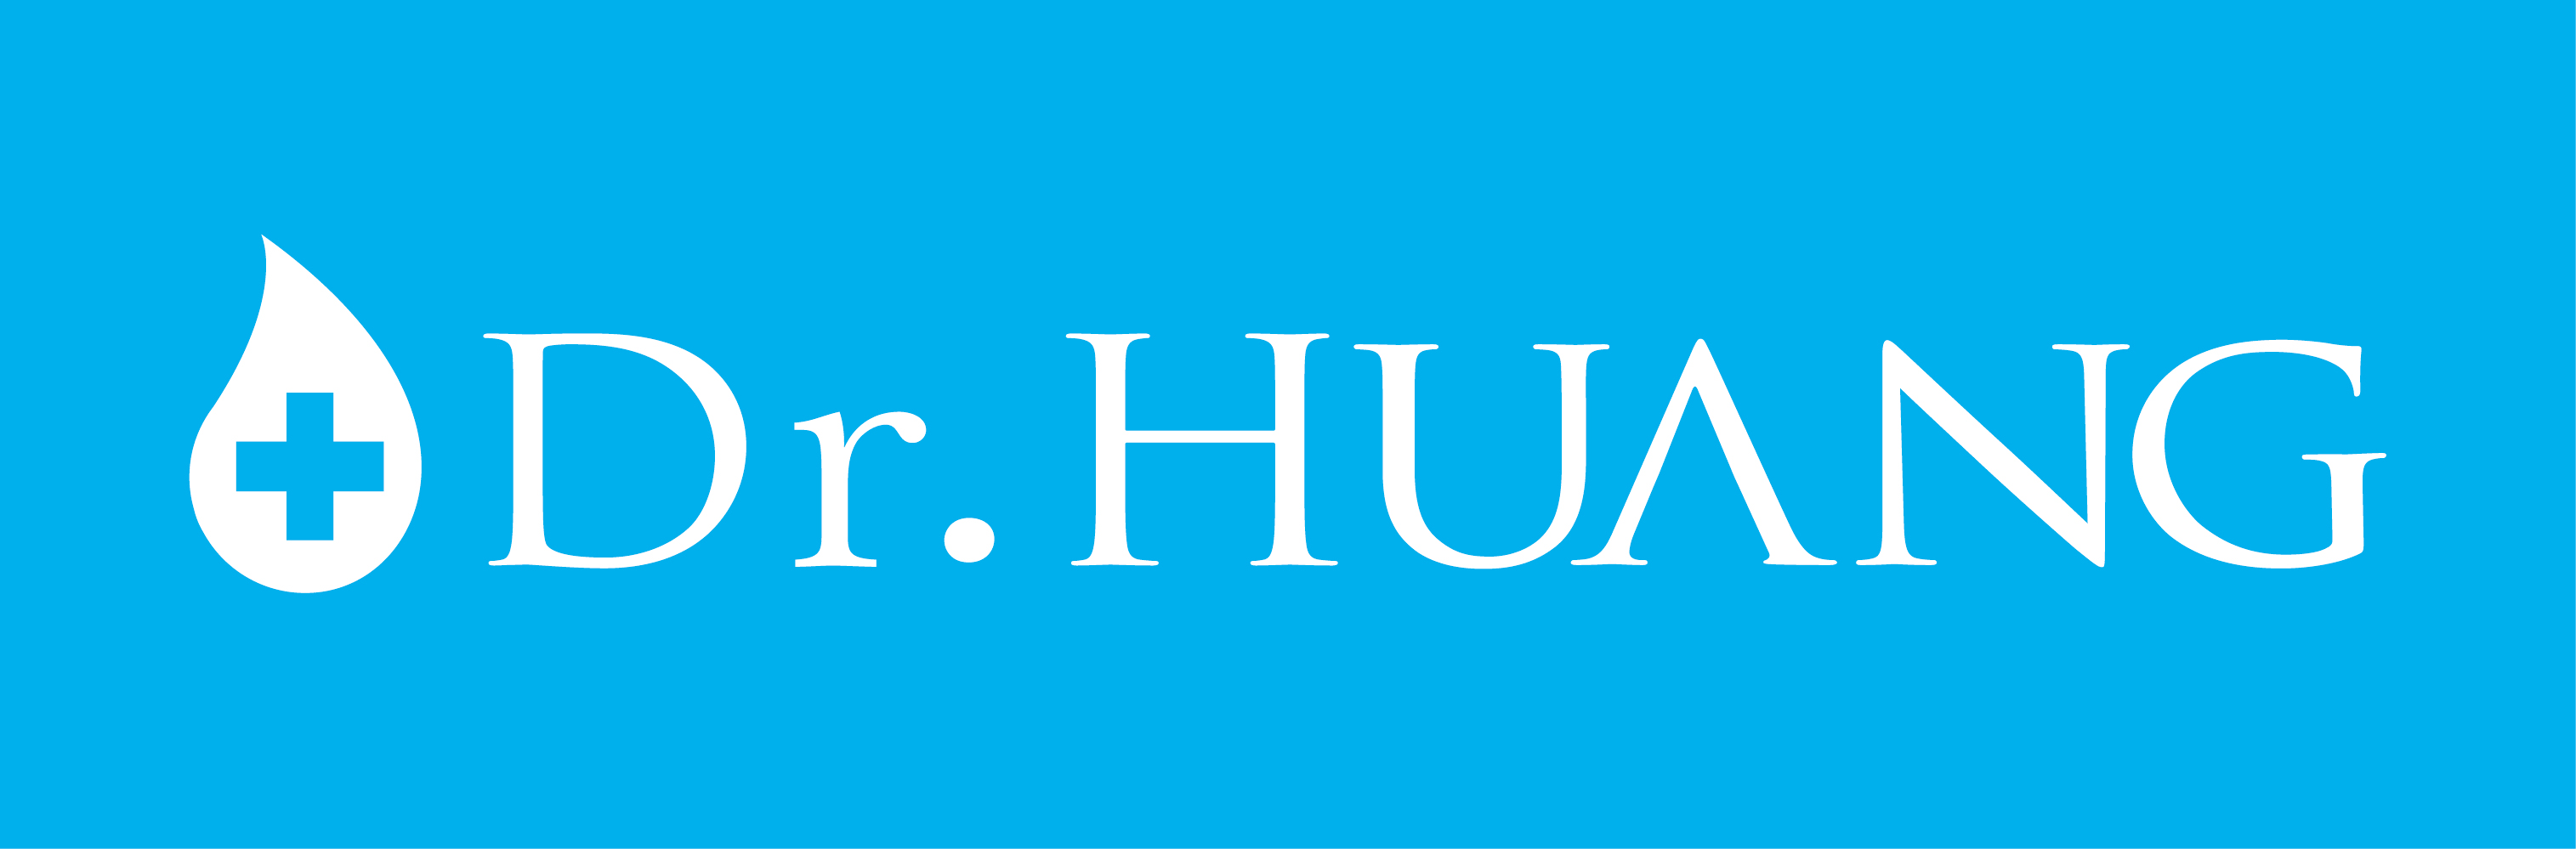 Dr.HUANG標準logo-給廠商.jpg